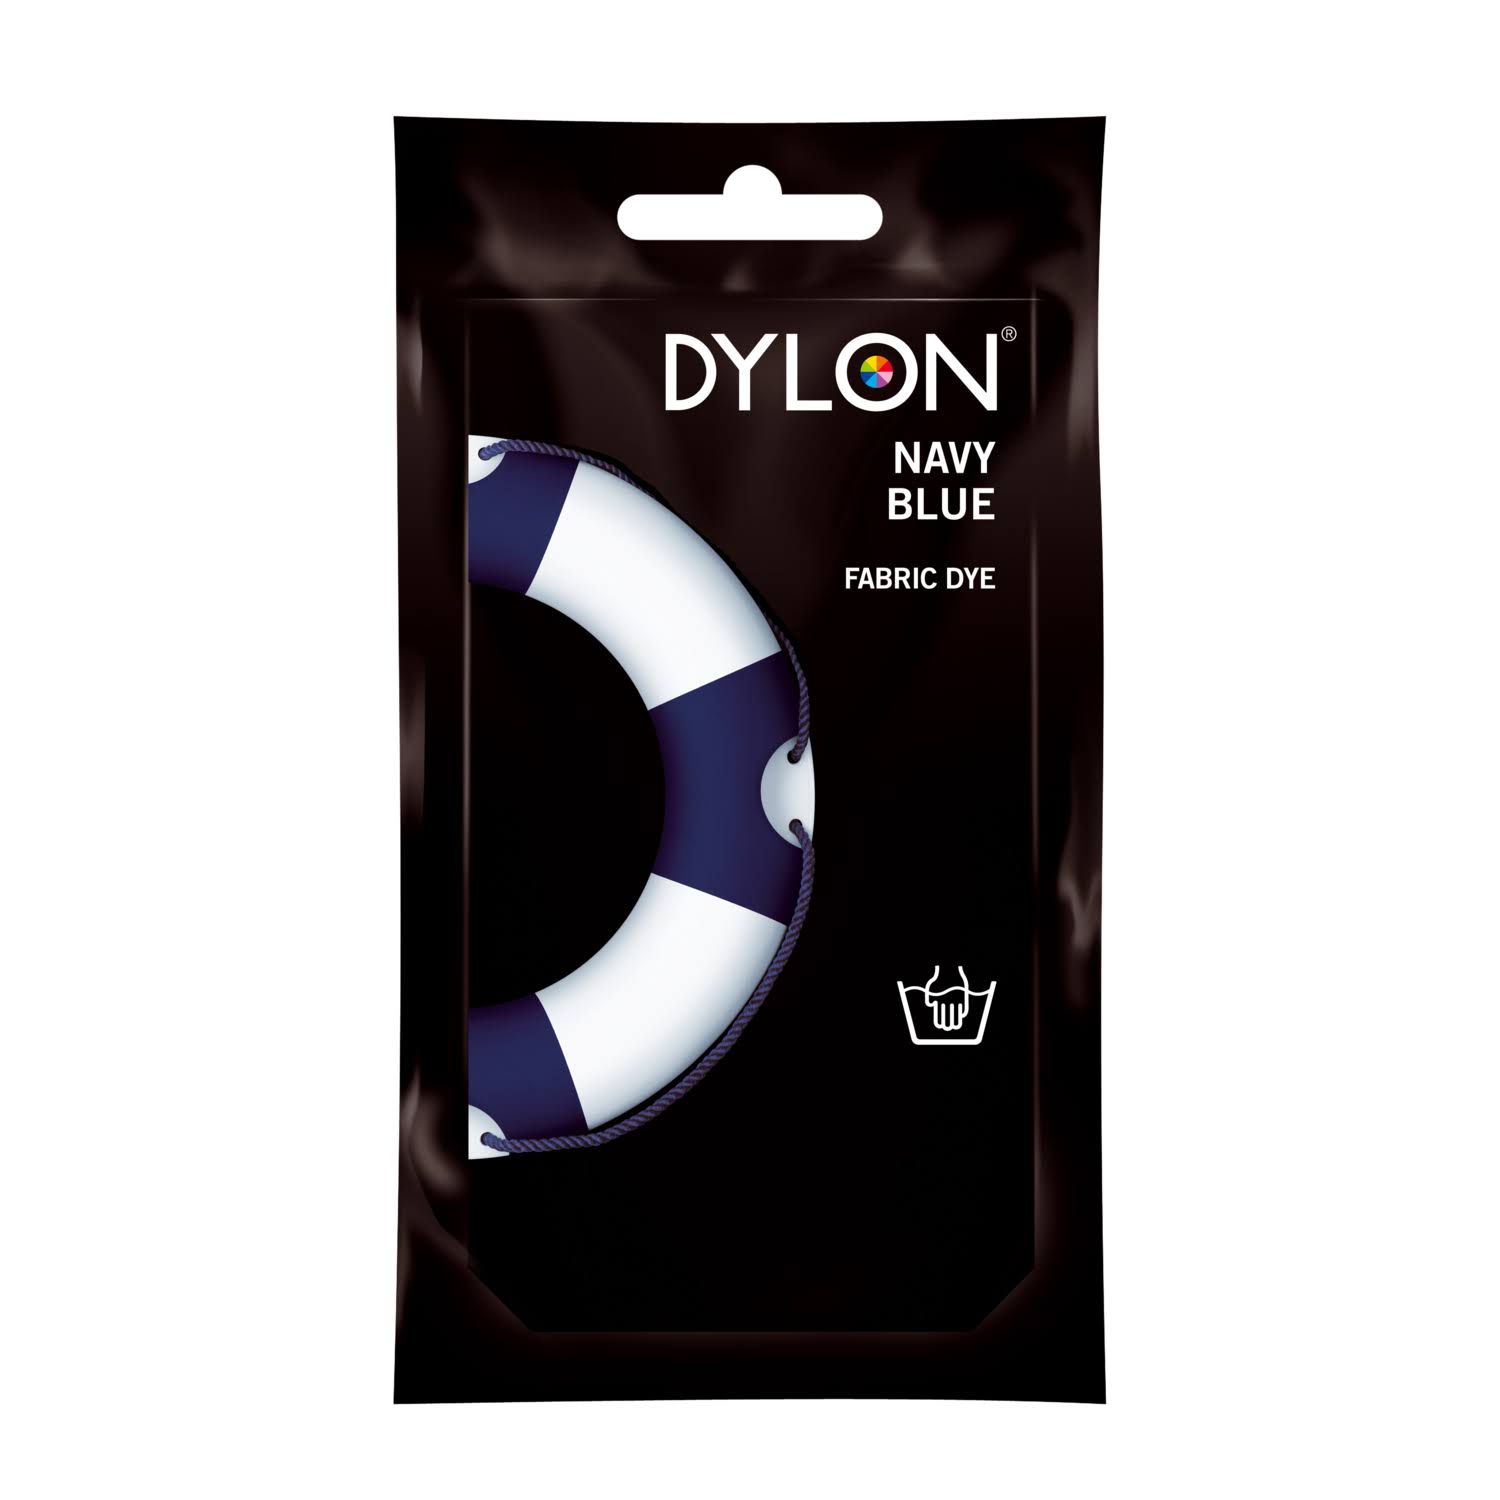 Dylon Hand Dye Fabric Dye - Navy Blue